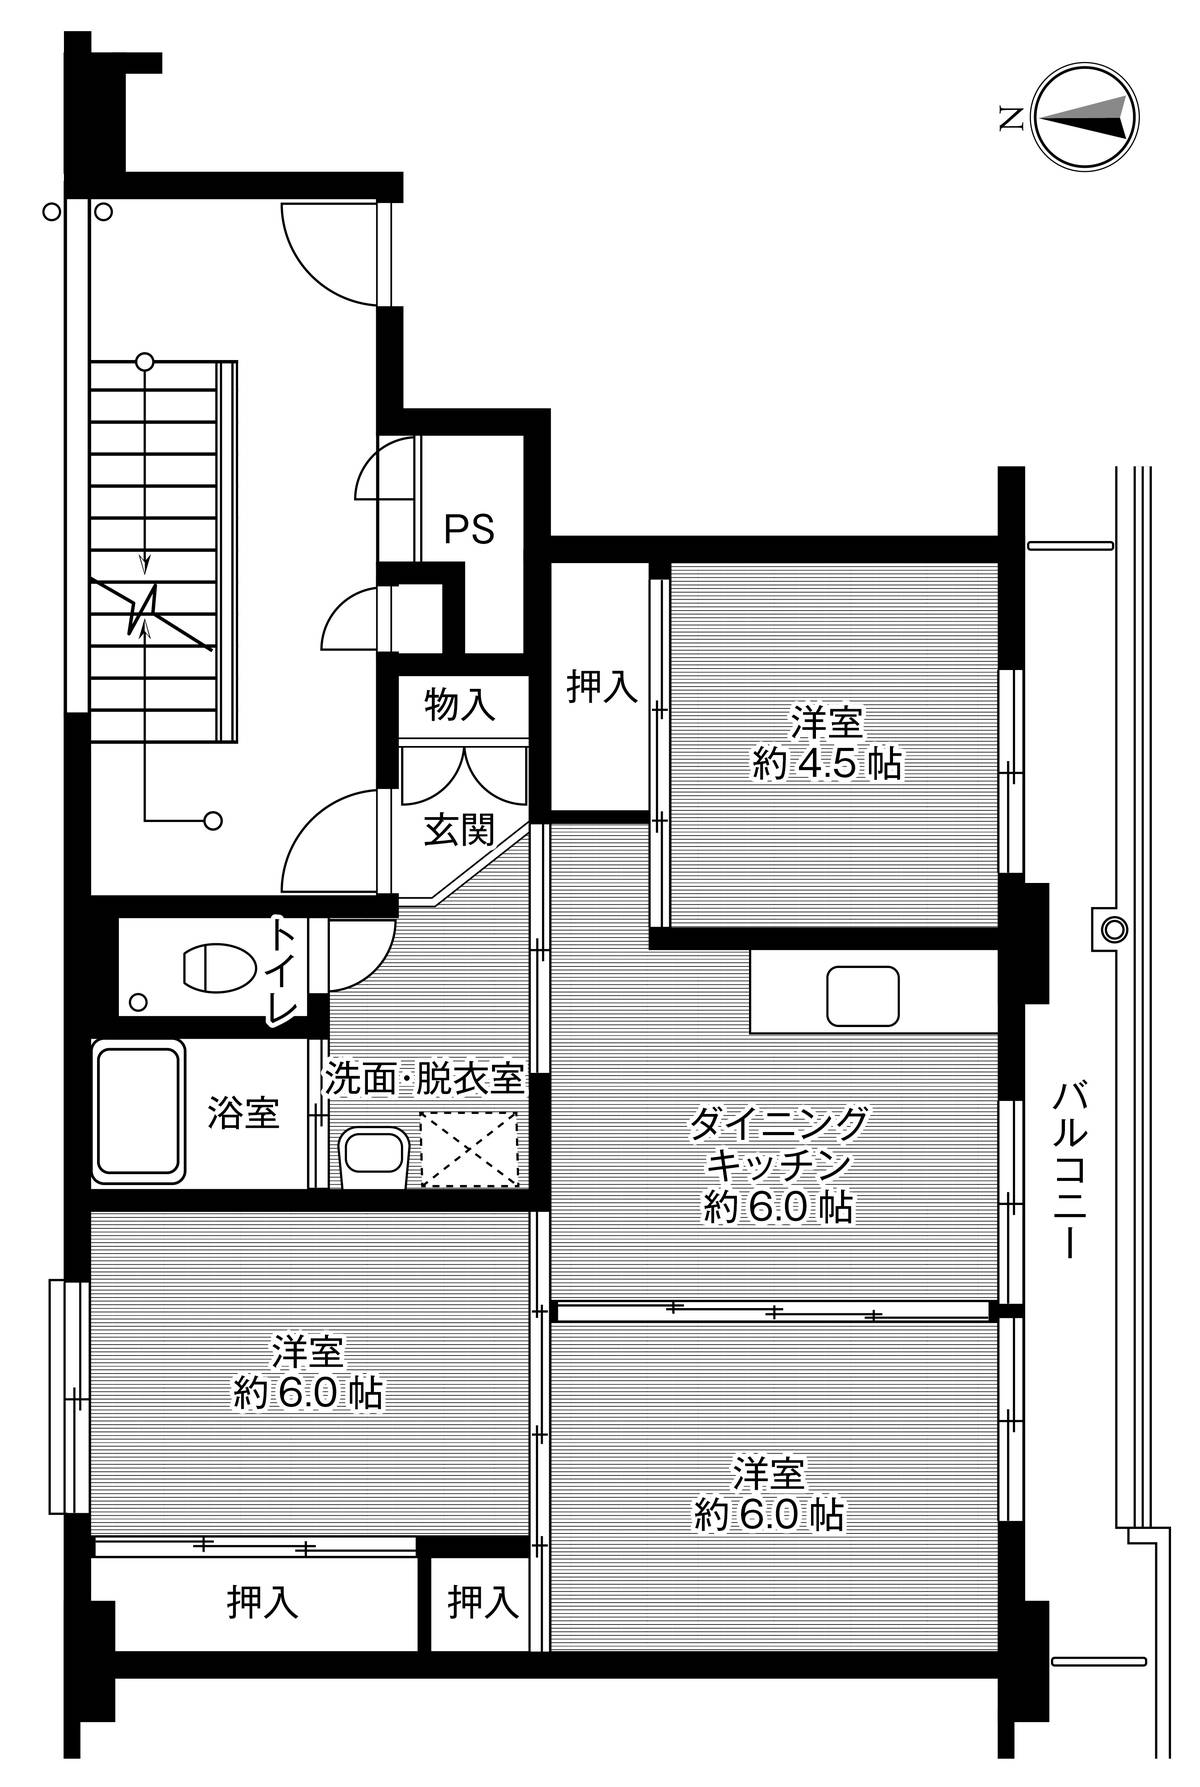 3DK floorplan of Village House Kaminokawa in Kawachi-gun